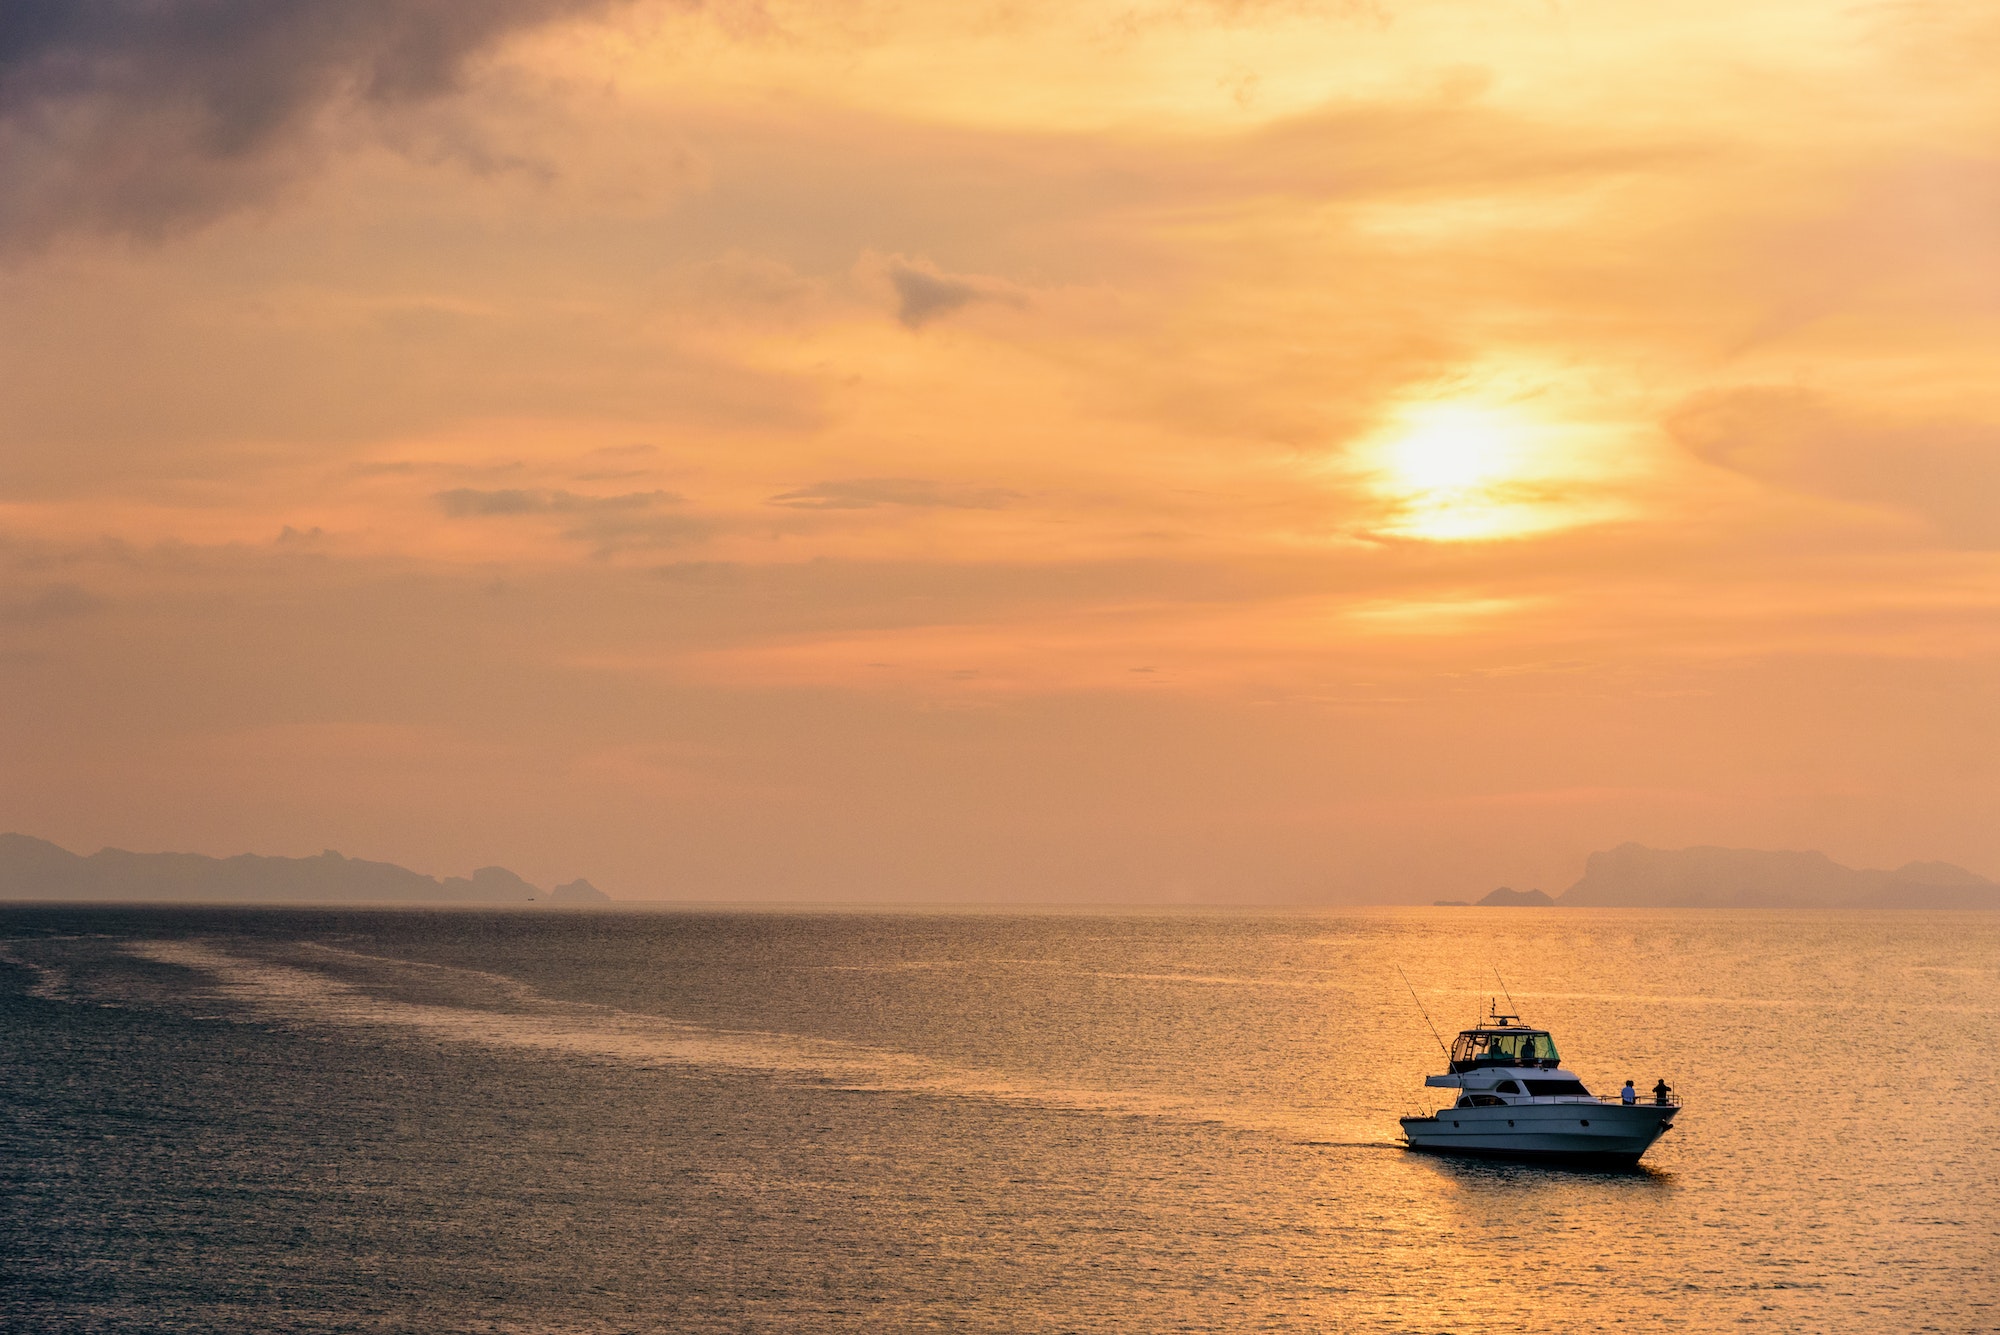 Speedboat returning during the sunset